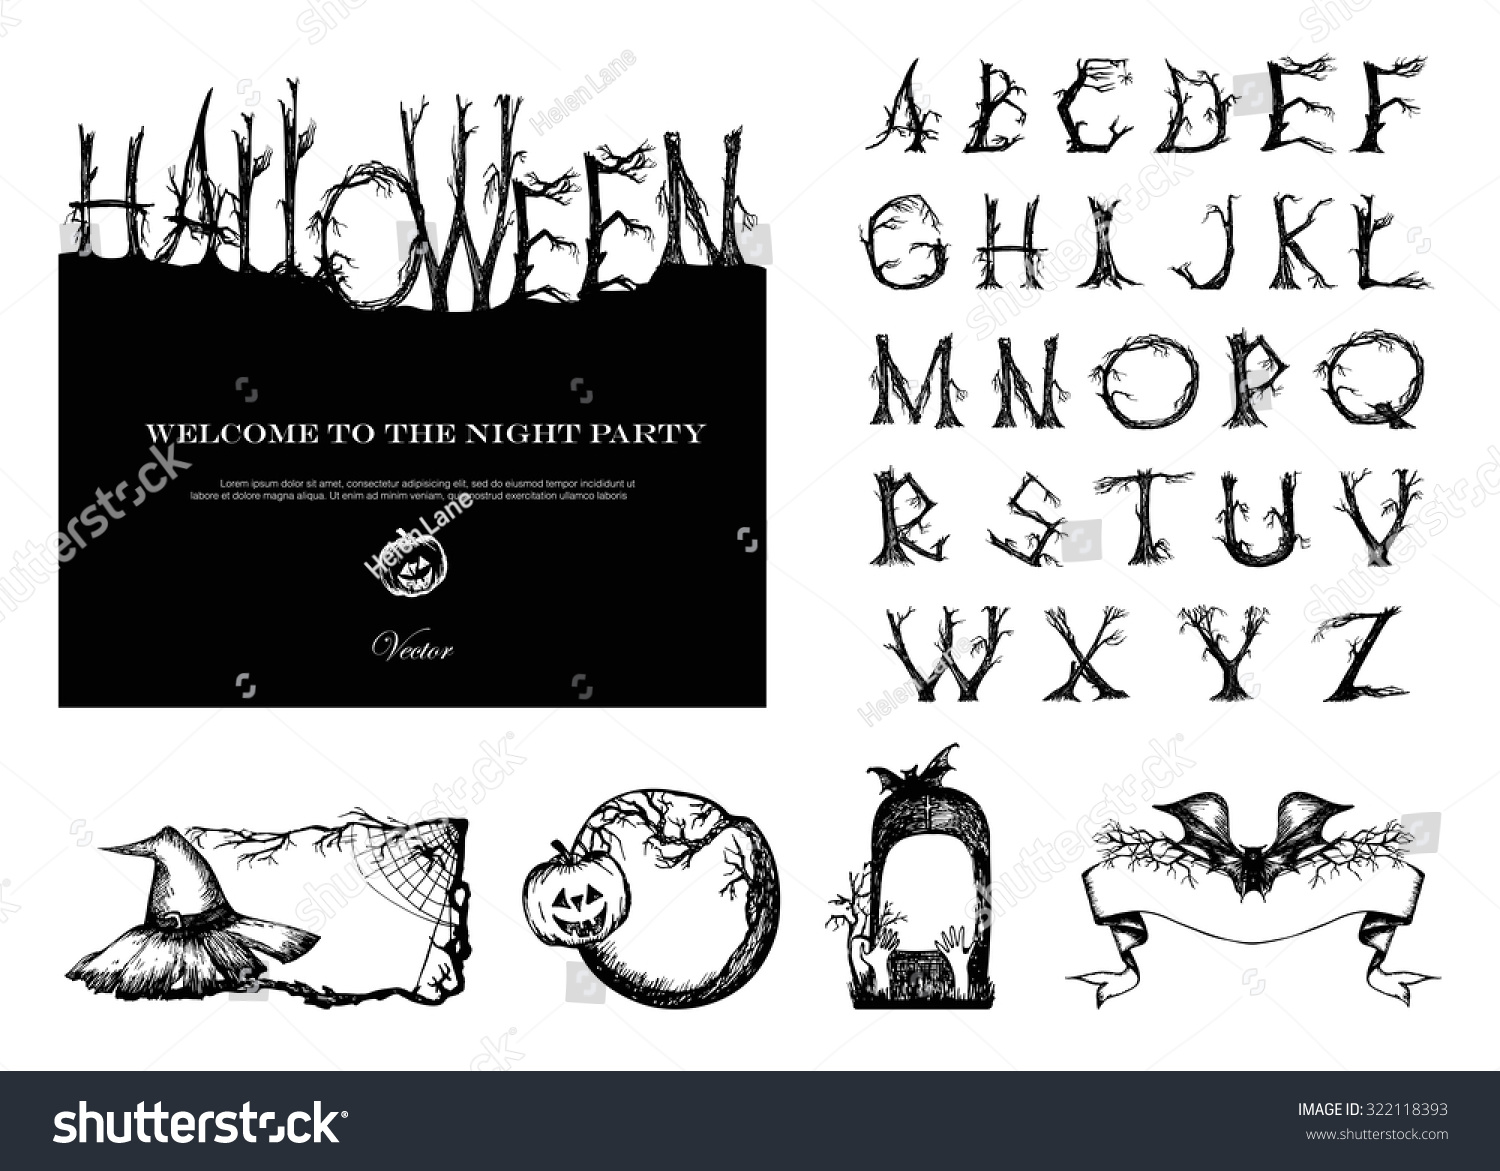 SVG of Hand Drawn Vintage Halloween Vector Set. Font with broken trees. 4 banners, card design. svg